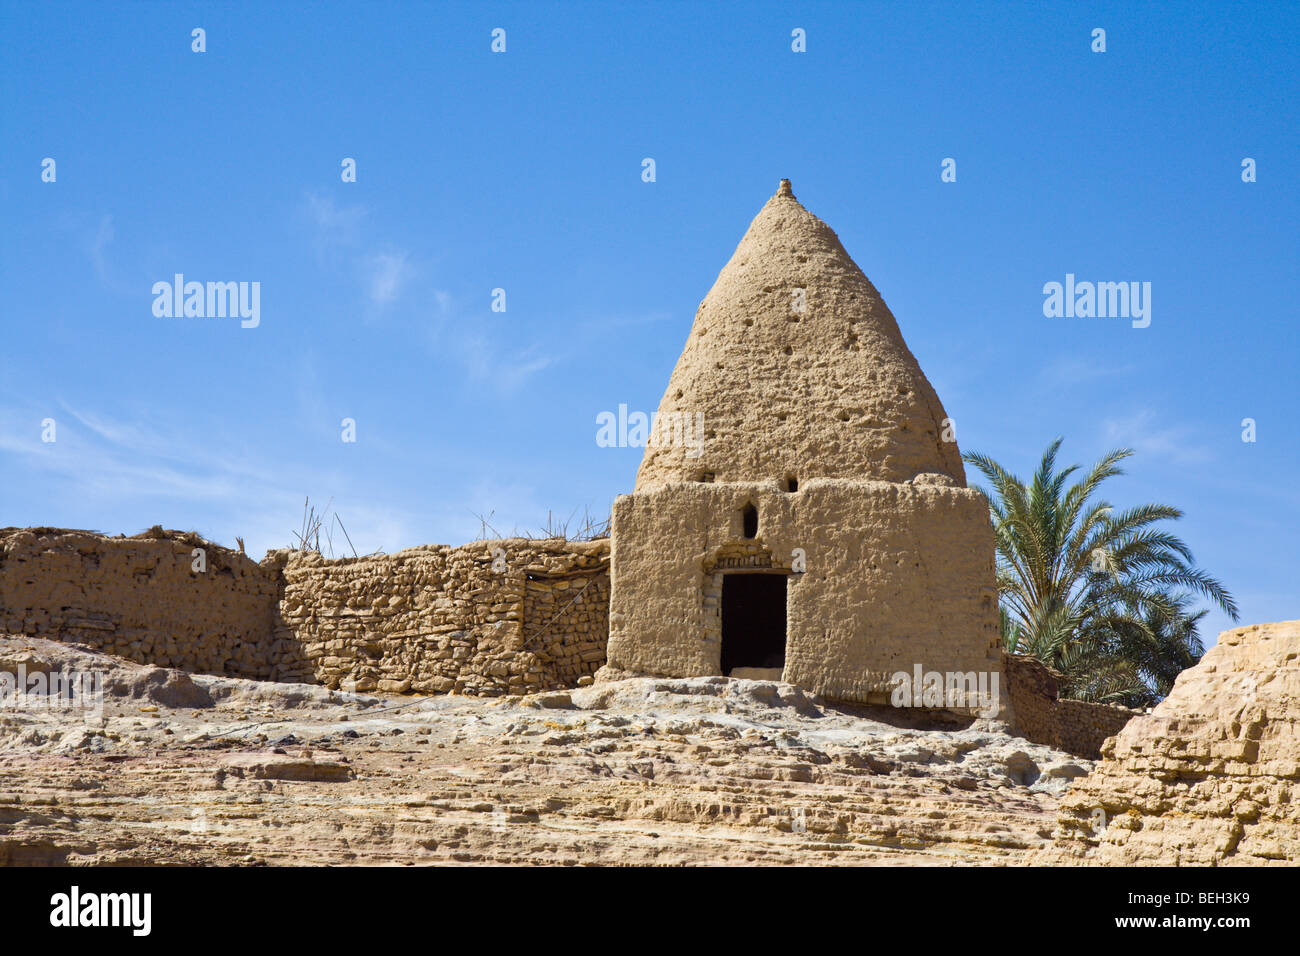 Old Town of Bahariya Oasis, Bahariya Oasis, Libyan Desert, Egypt Stock Photo